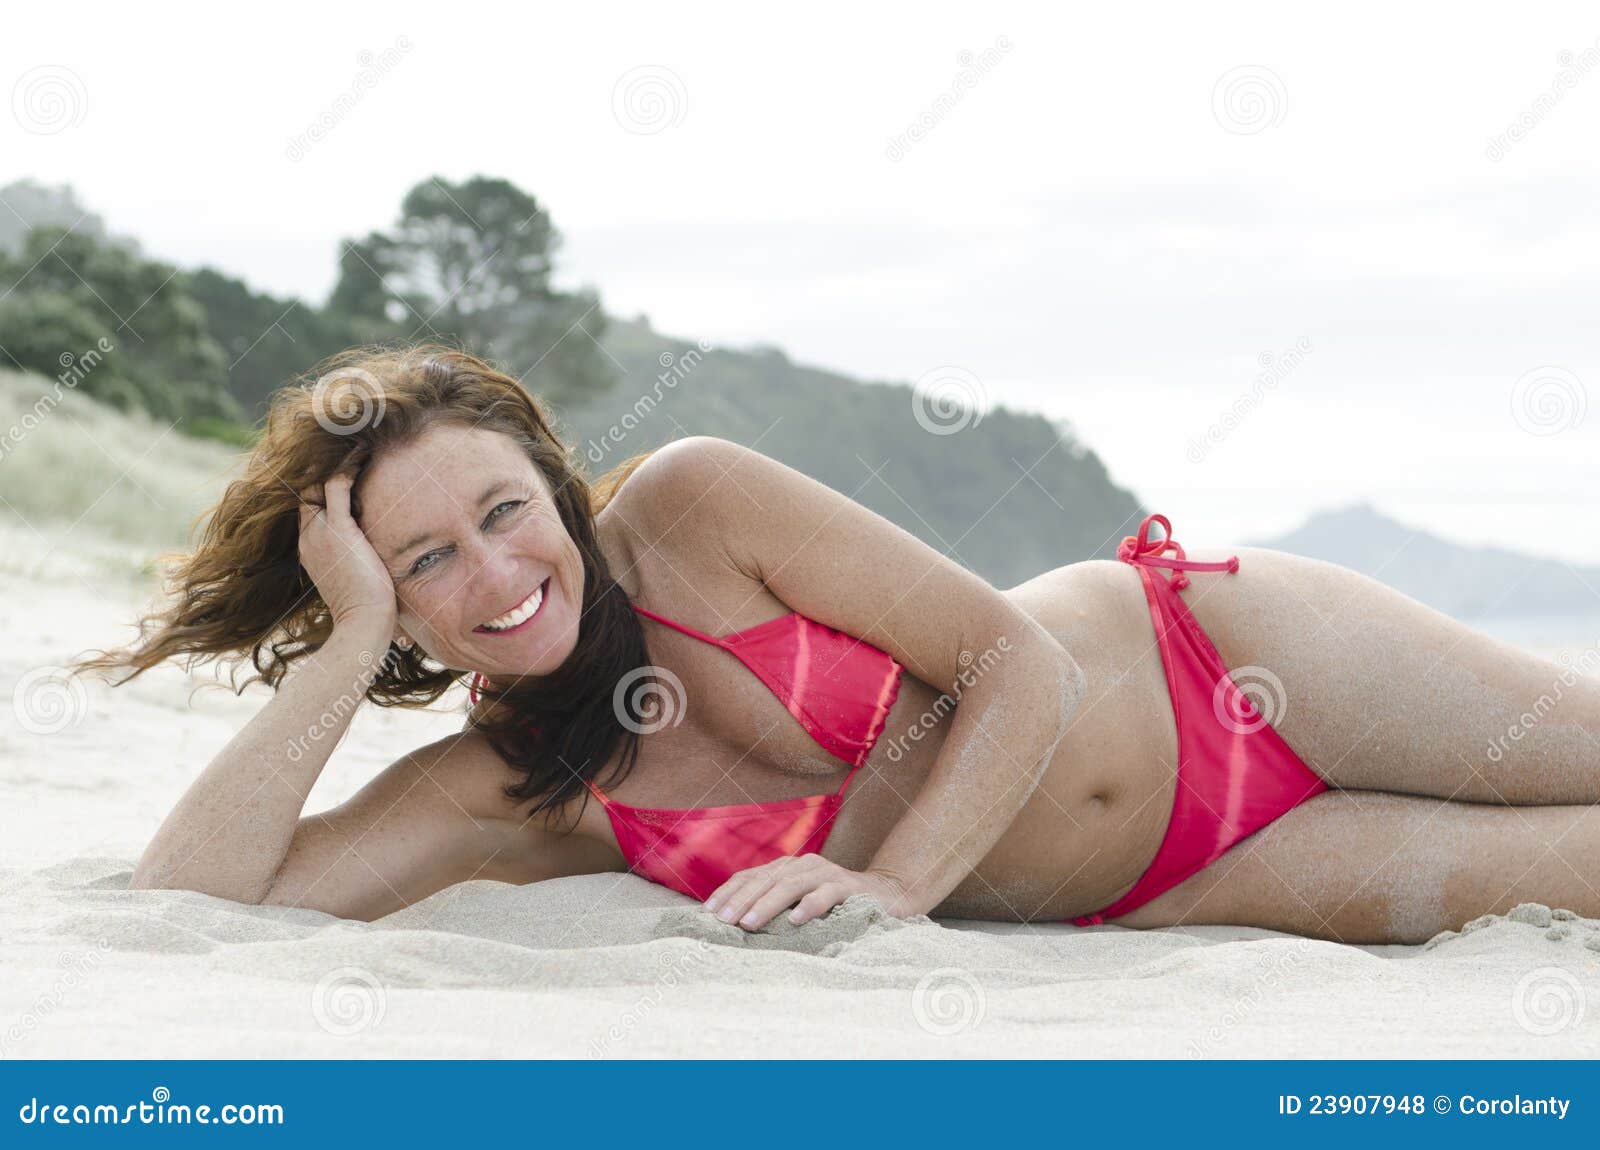 bert hilado add mature women in thong bikinis photo